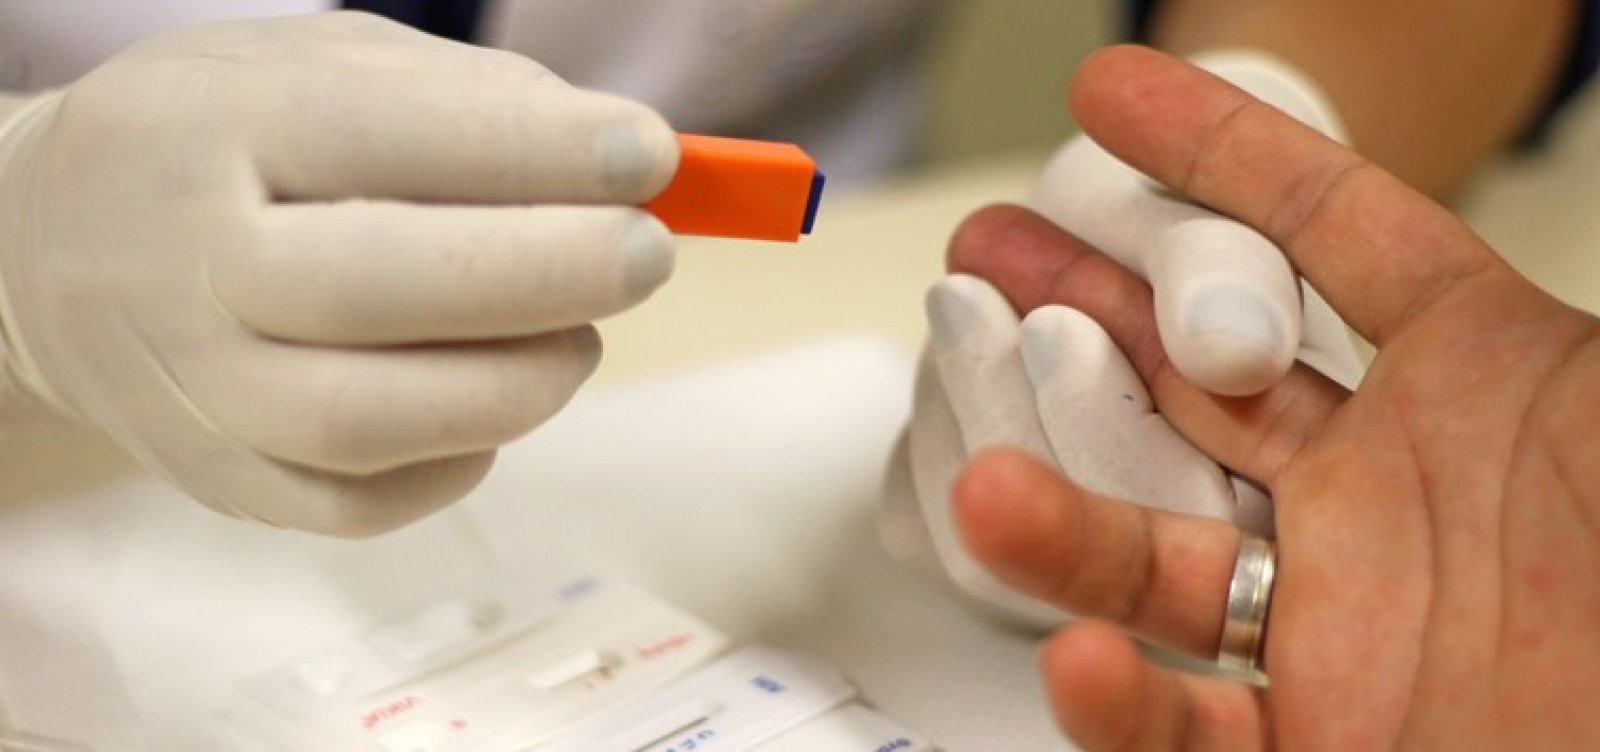 Ministério da Saúde orienta farmácias a realizar testes rápidos de HIV, hepatites virais, sífilis e ISTs